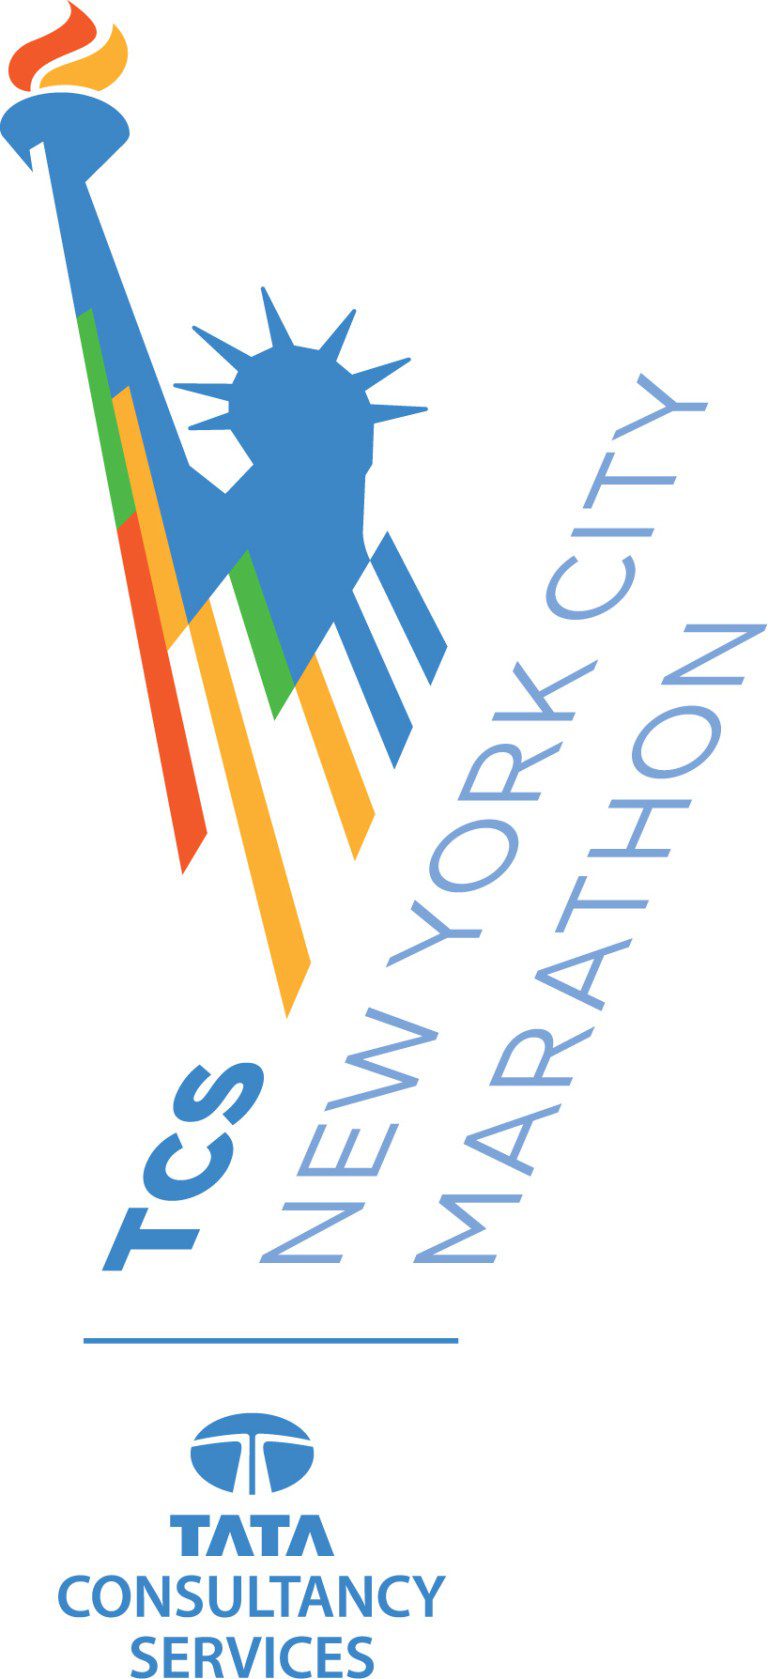 nyc-marathon-opens-registration-triathlon-magazine-canada